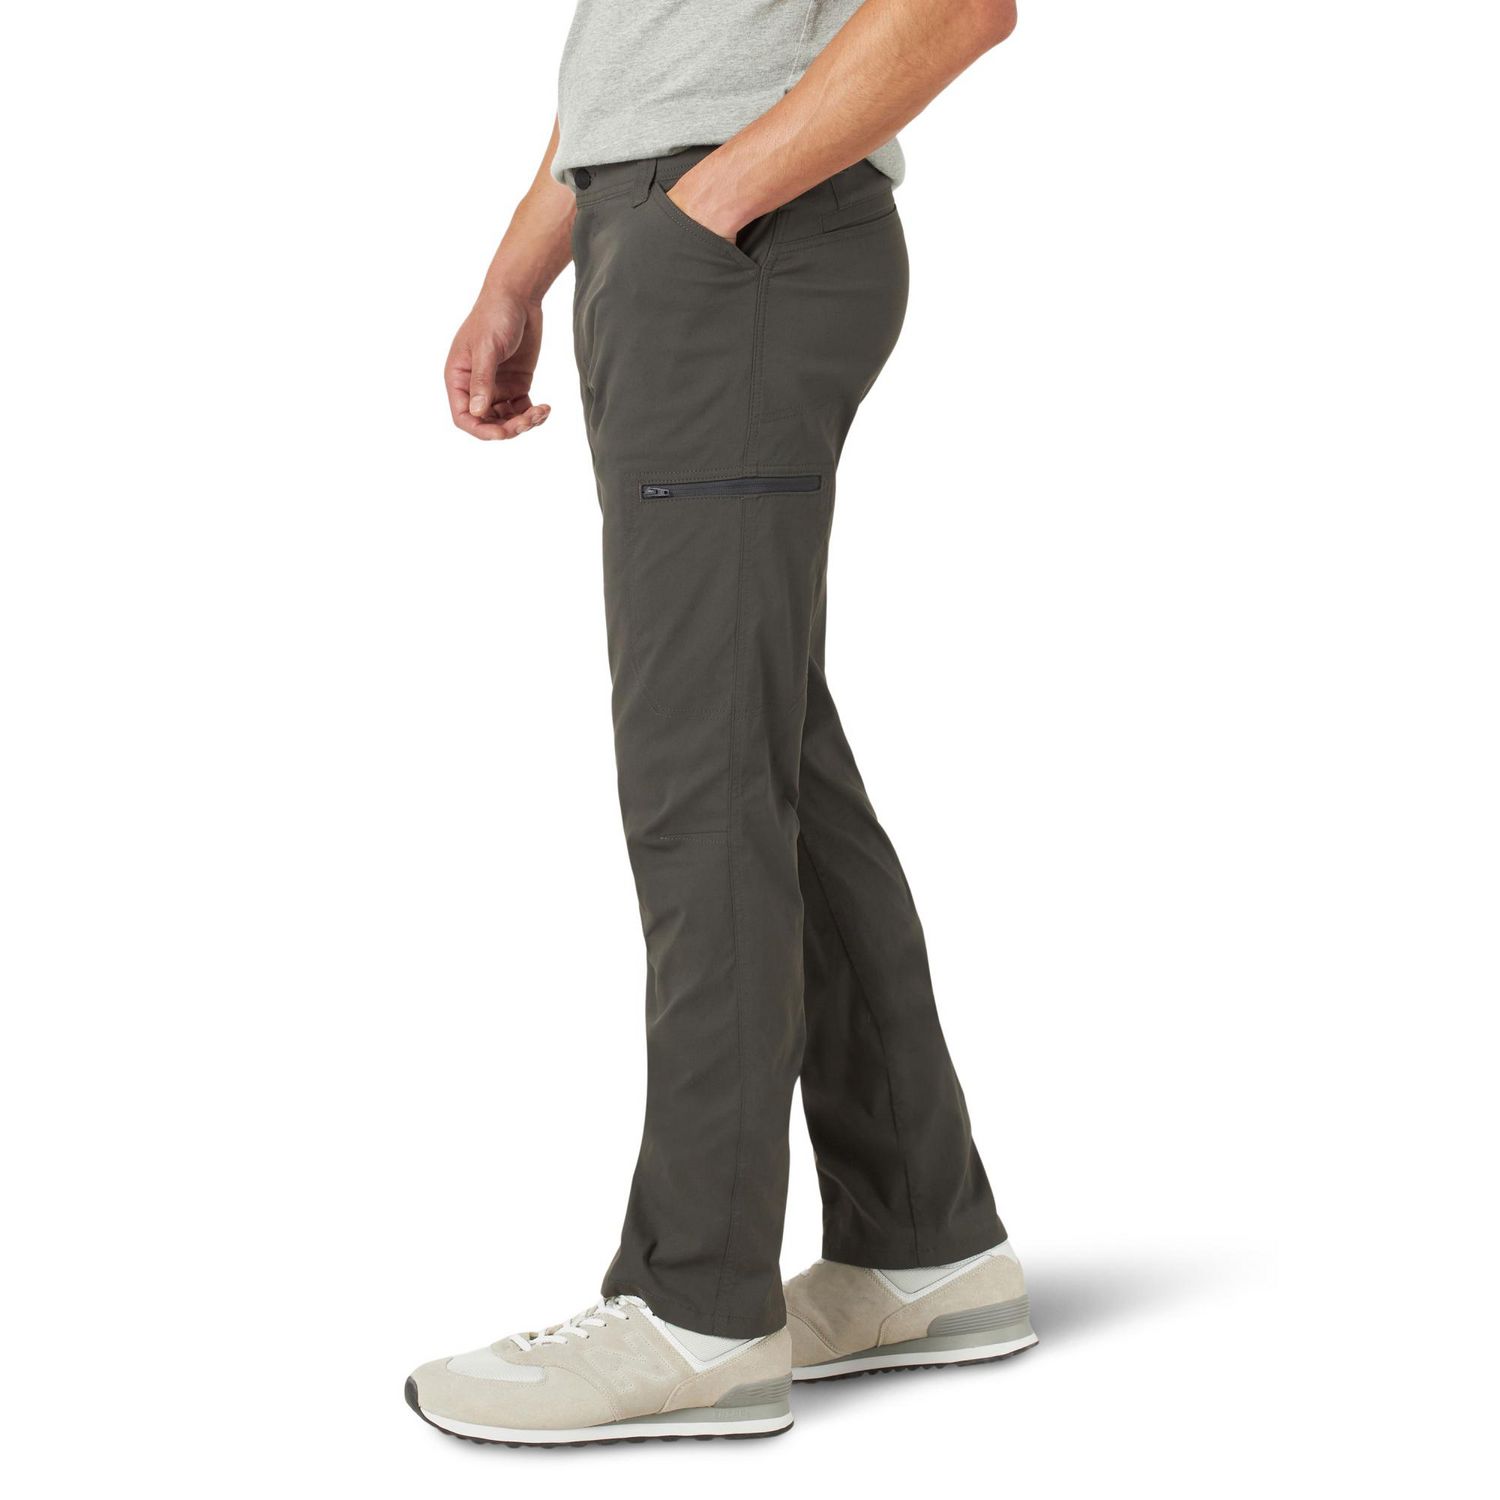 Wrangler Men's Outdoor Performance Pant, Quick dry fabric - Walmart.ca